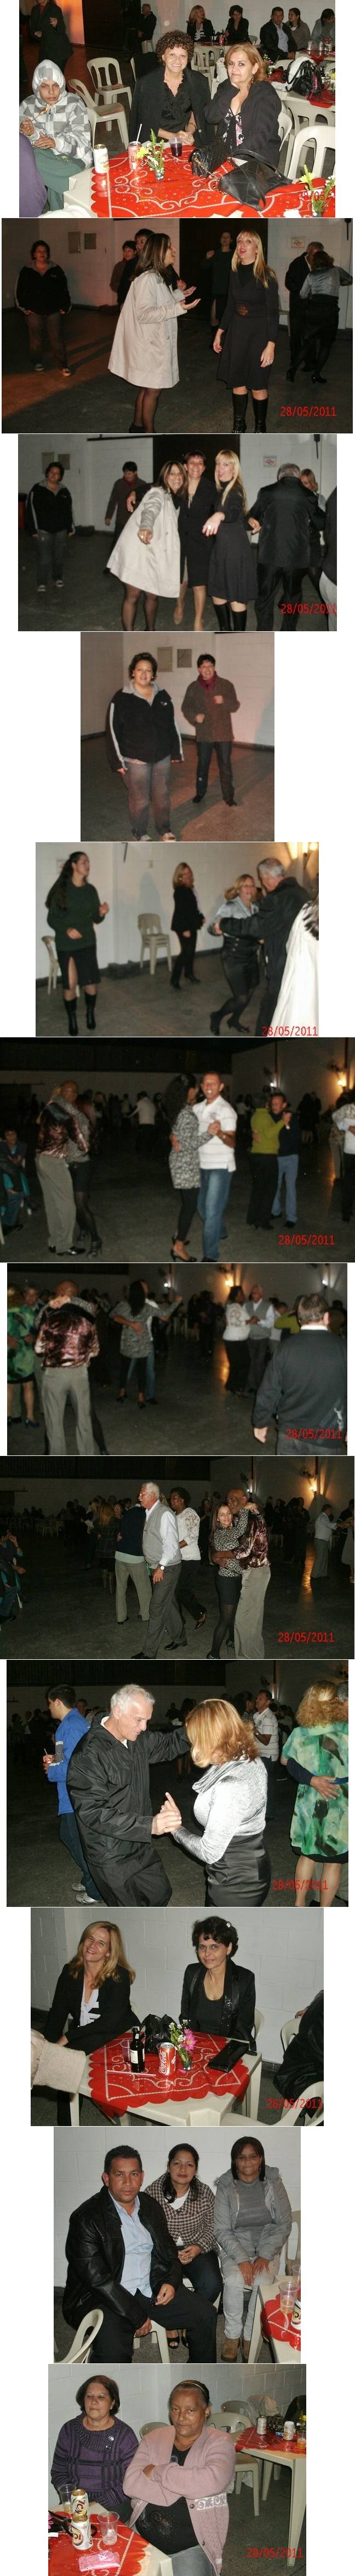 baile aniv.2011